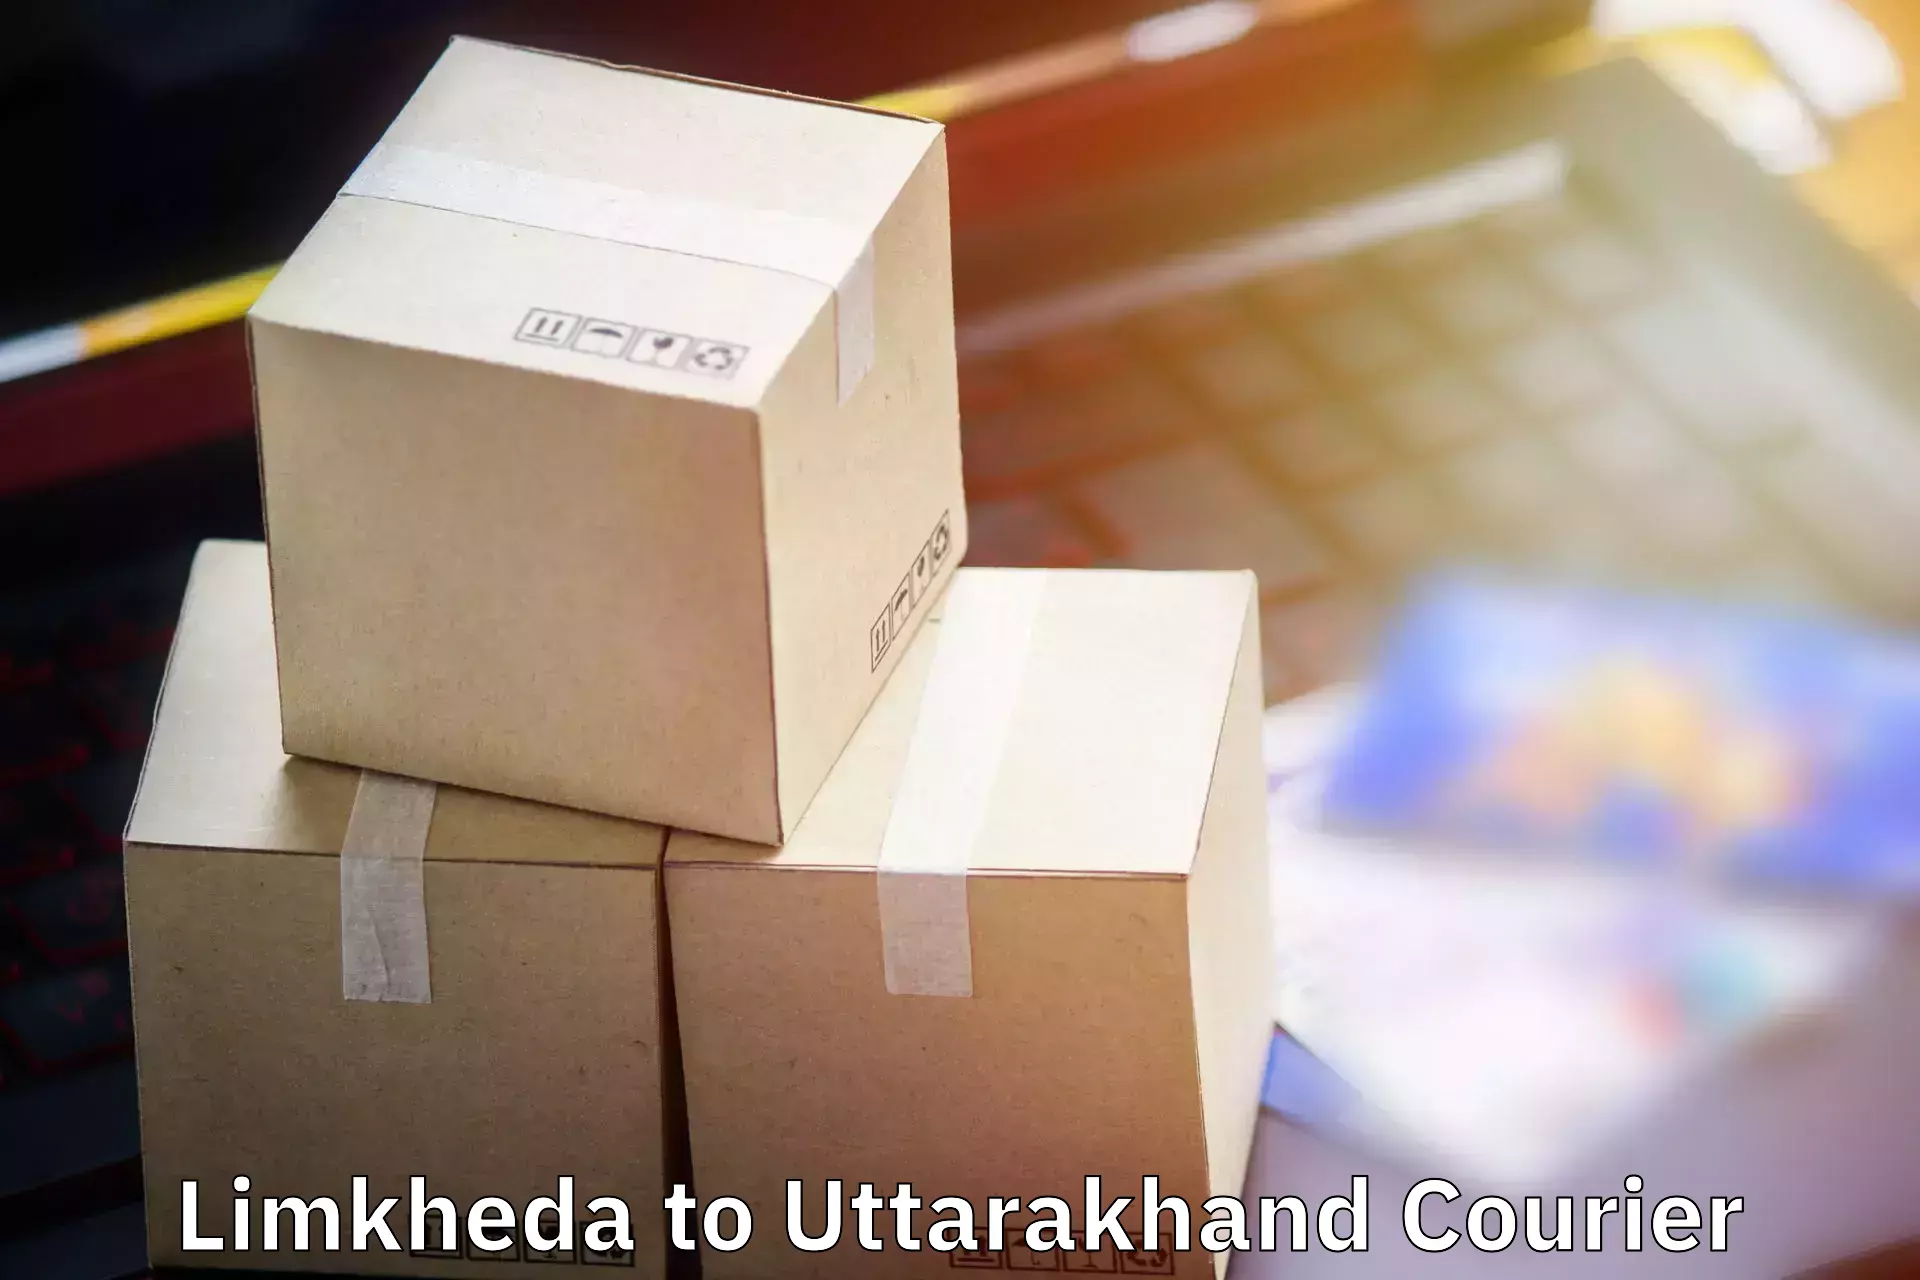 Baggage relocation service Limkheda to Rishikesh